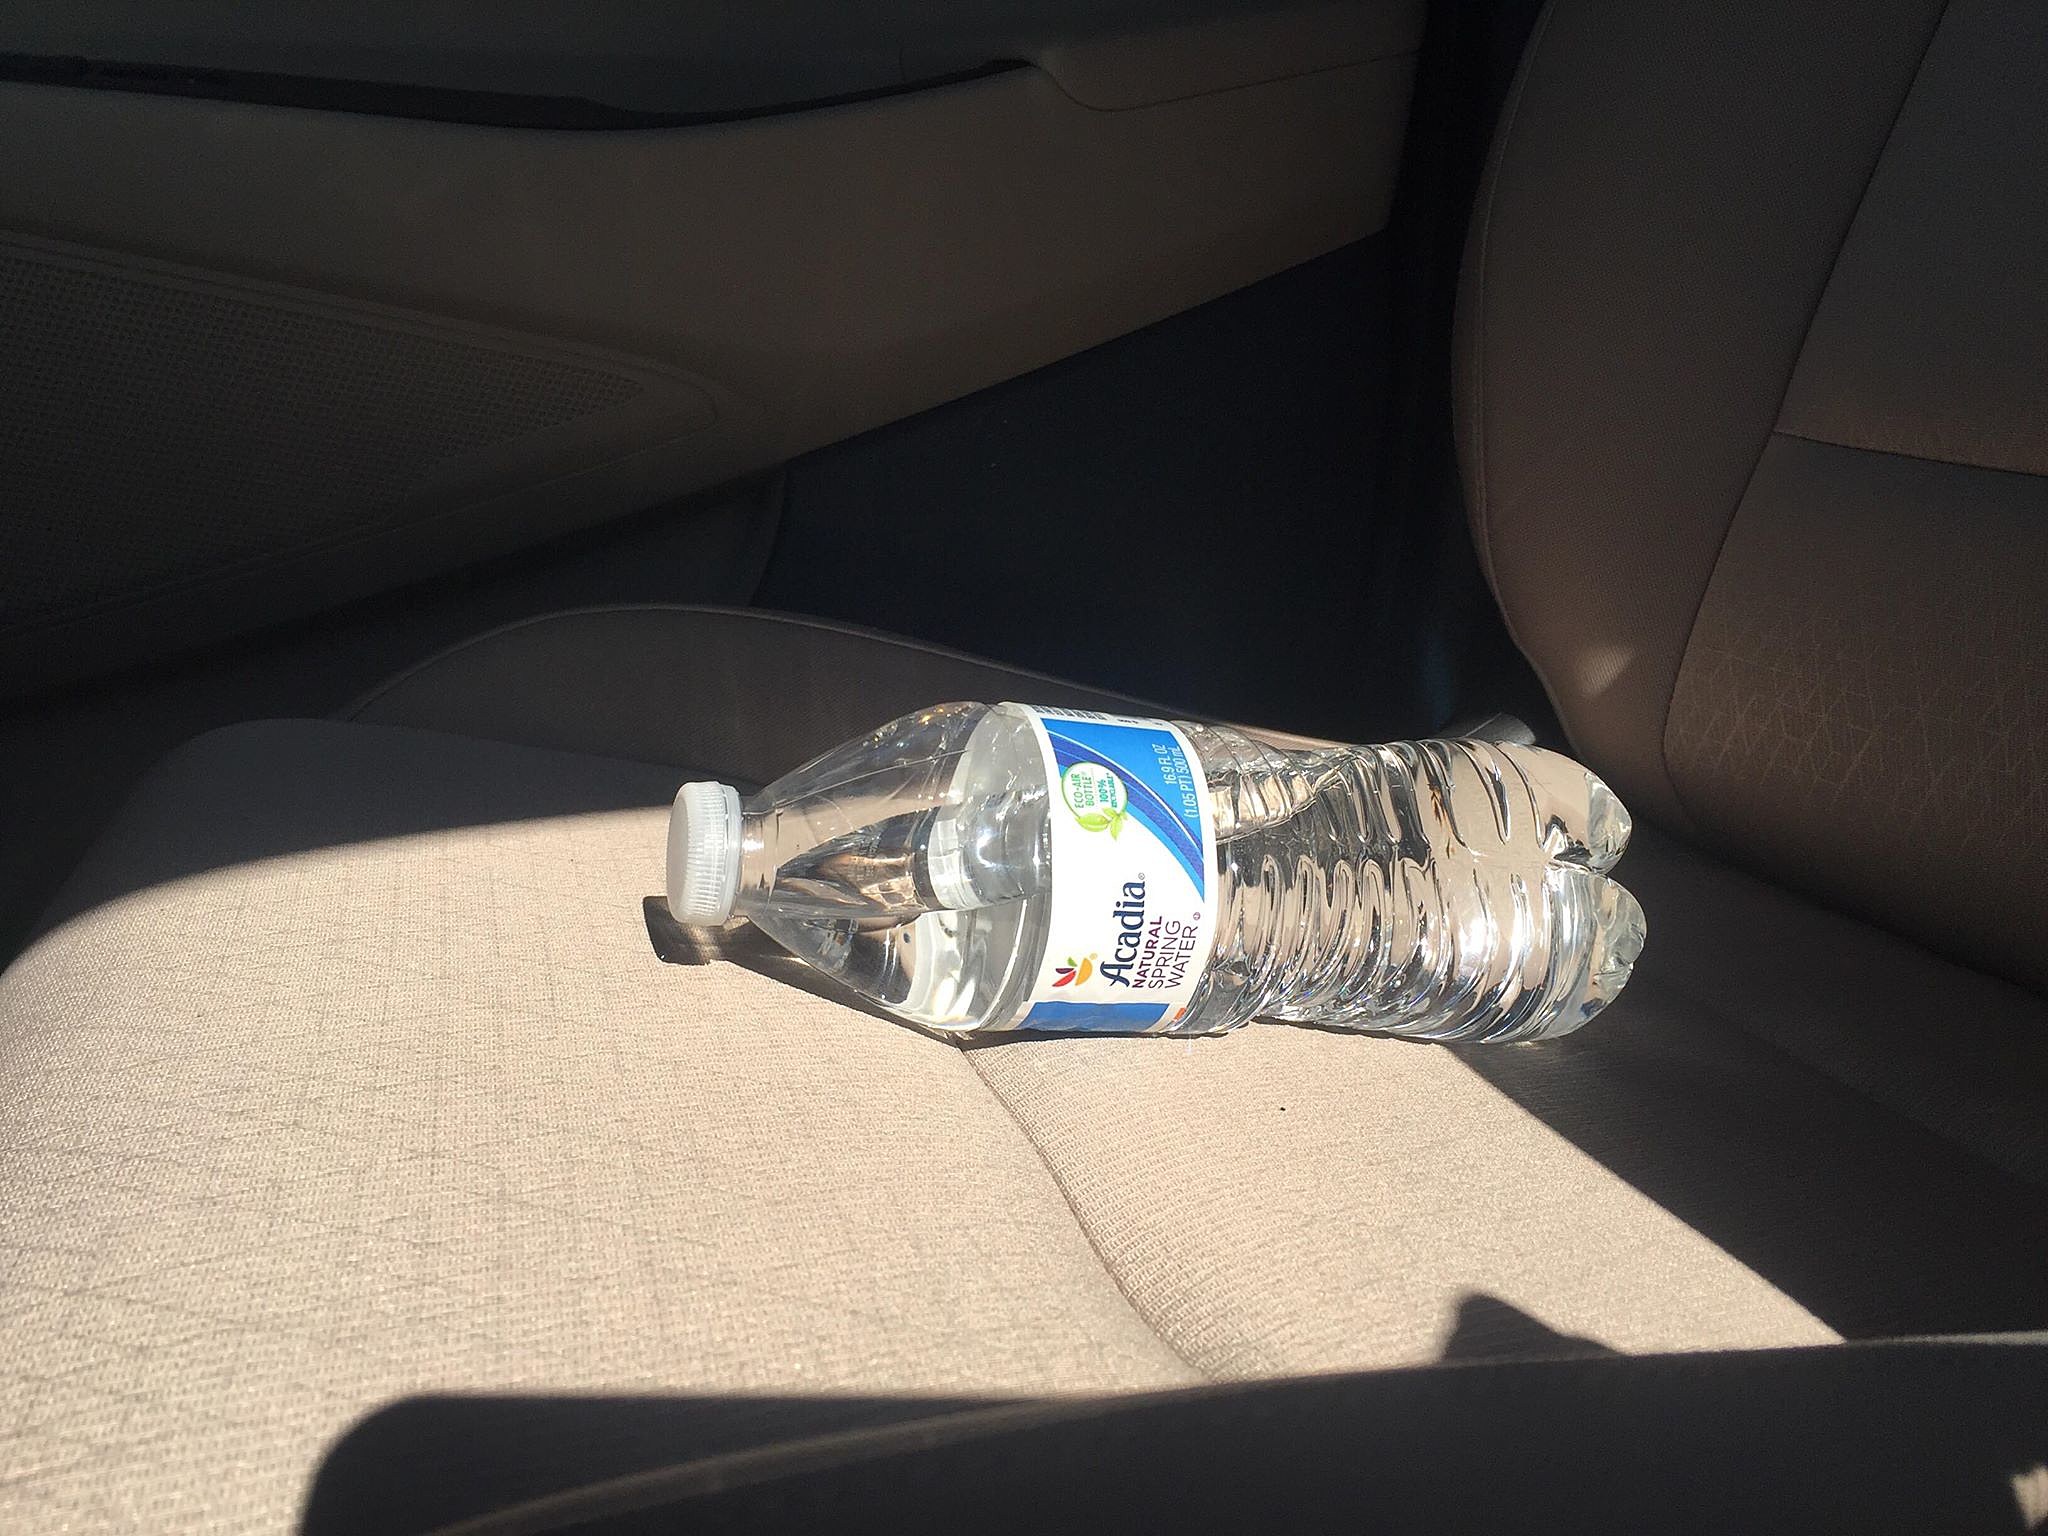 Image result for water bottle in car